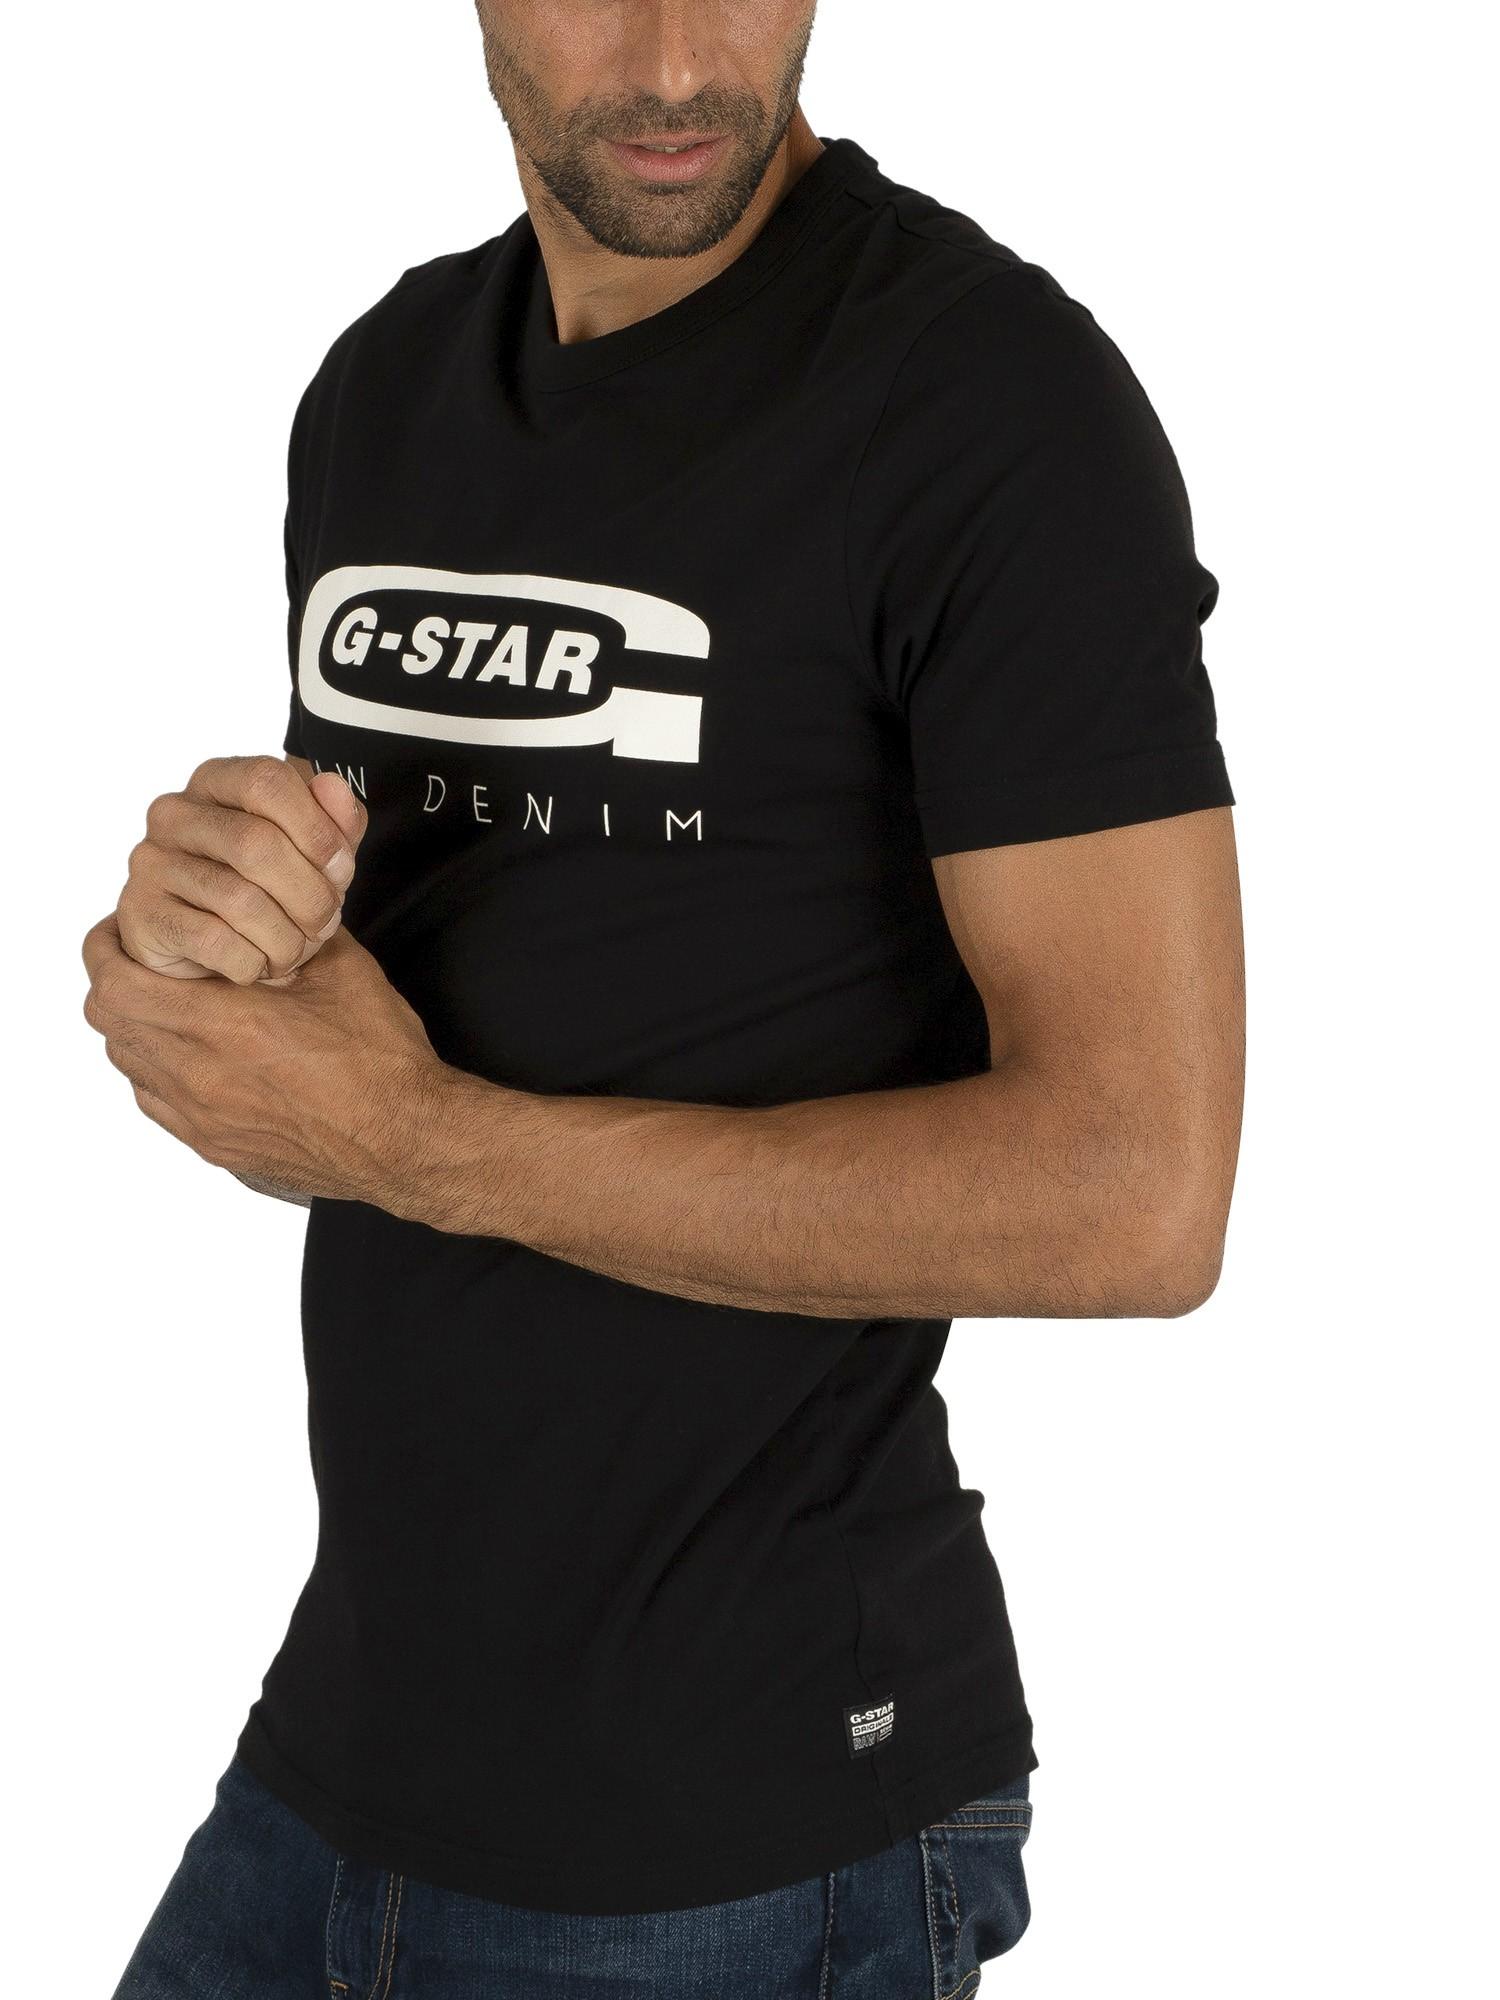 G-Star RAW Graphic Slim T-shirt in Dark Black (Black) for Men - Lyst